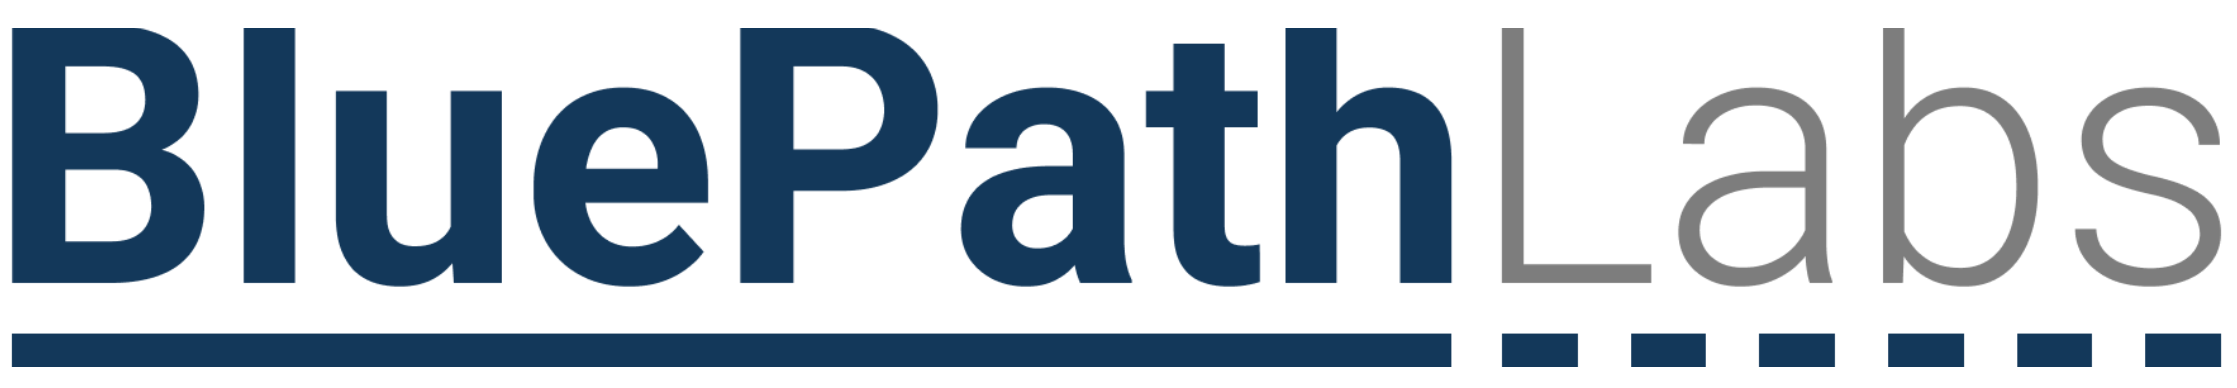 BluePath-logo